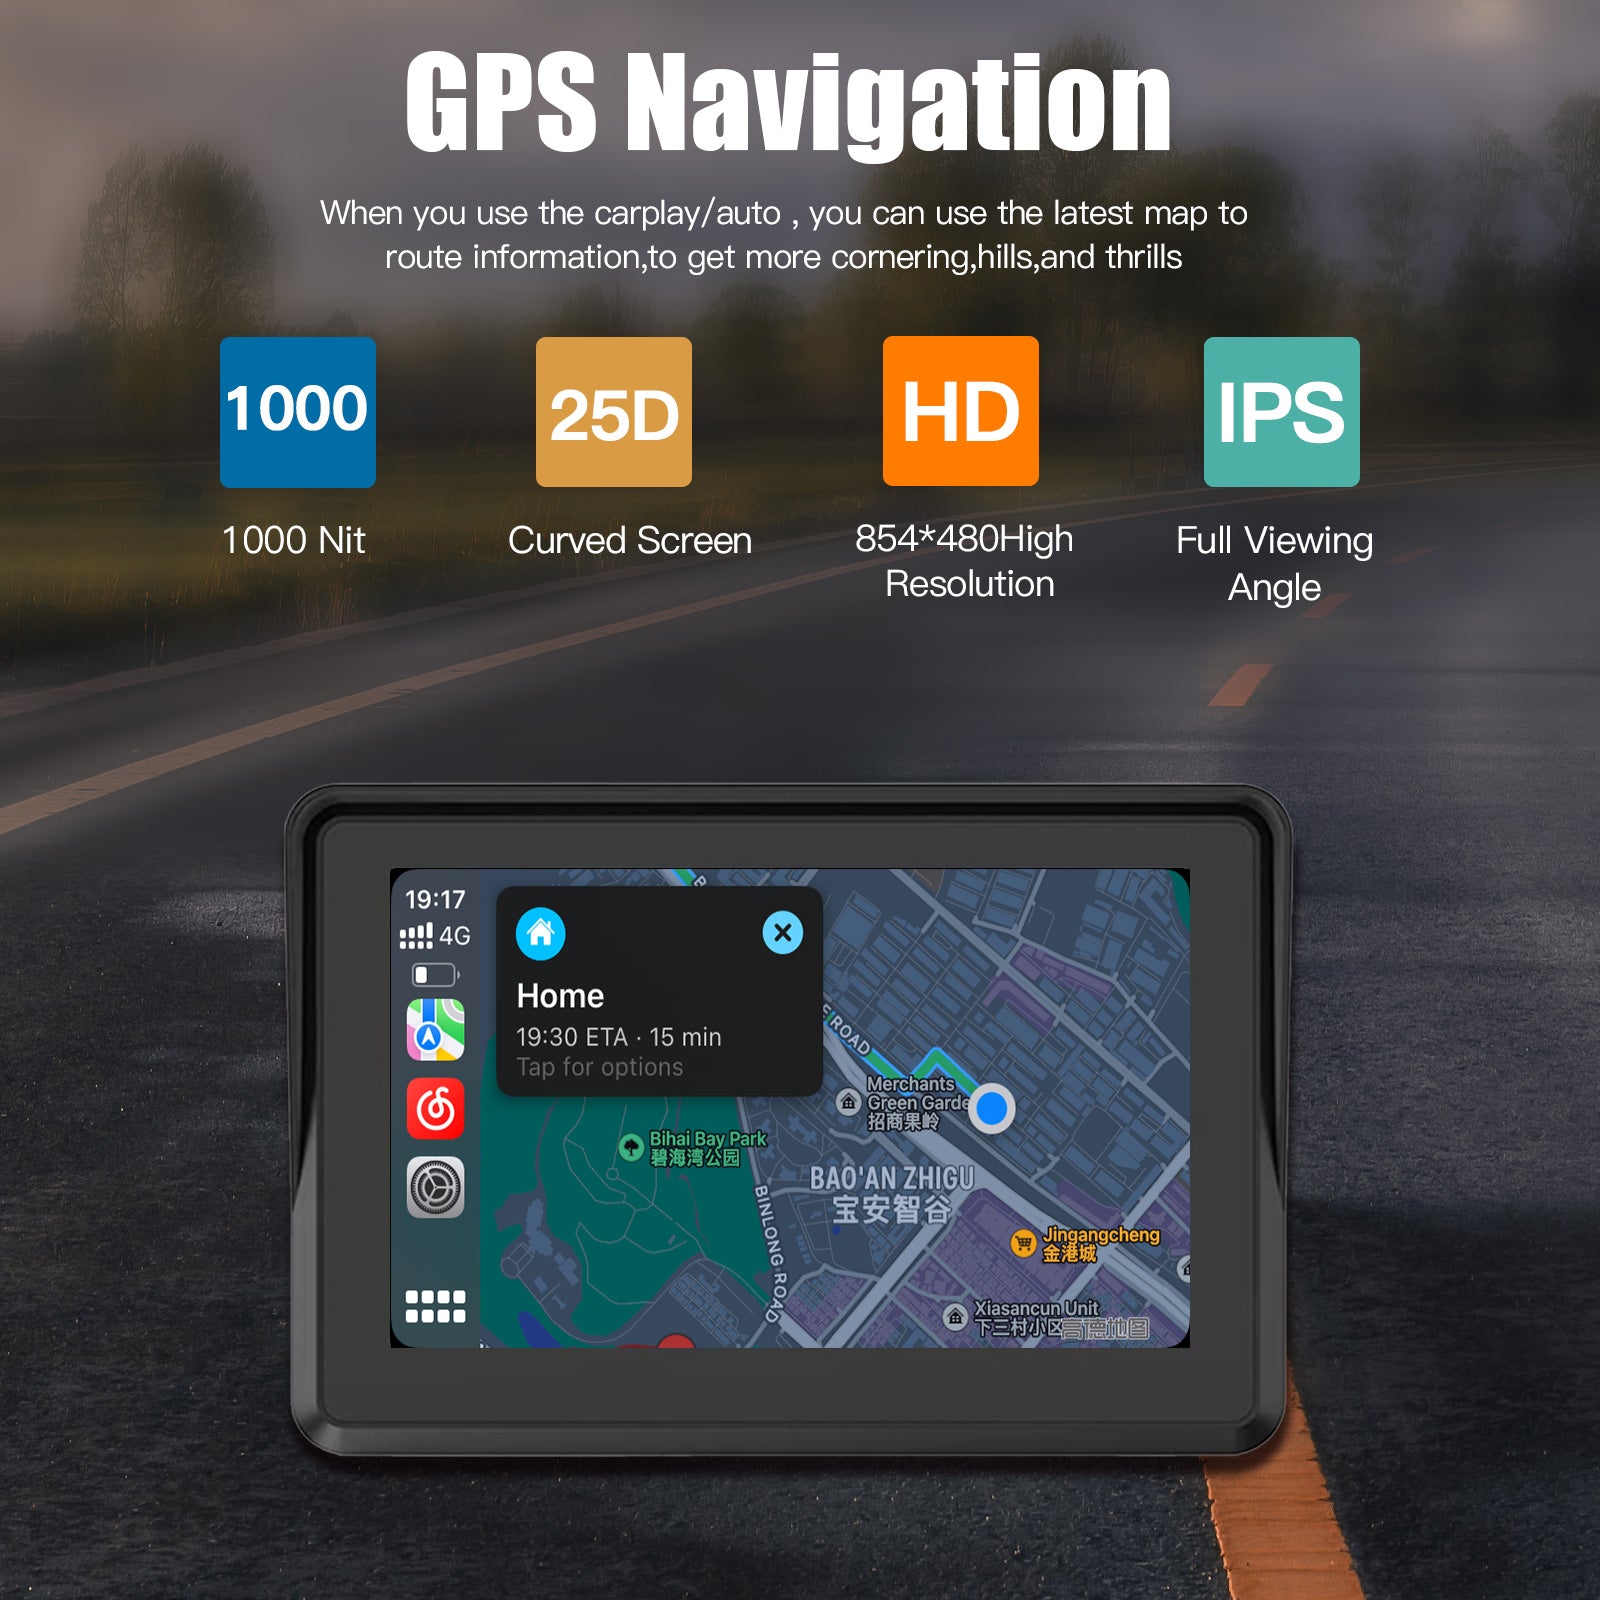 5 Touch Screen Motorcycle Navigator SAT NAV Wireless CarPlay Android Auto